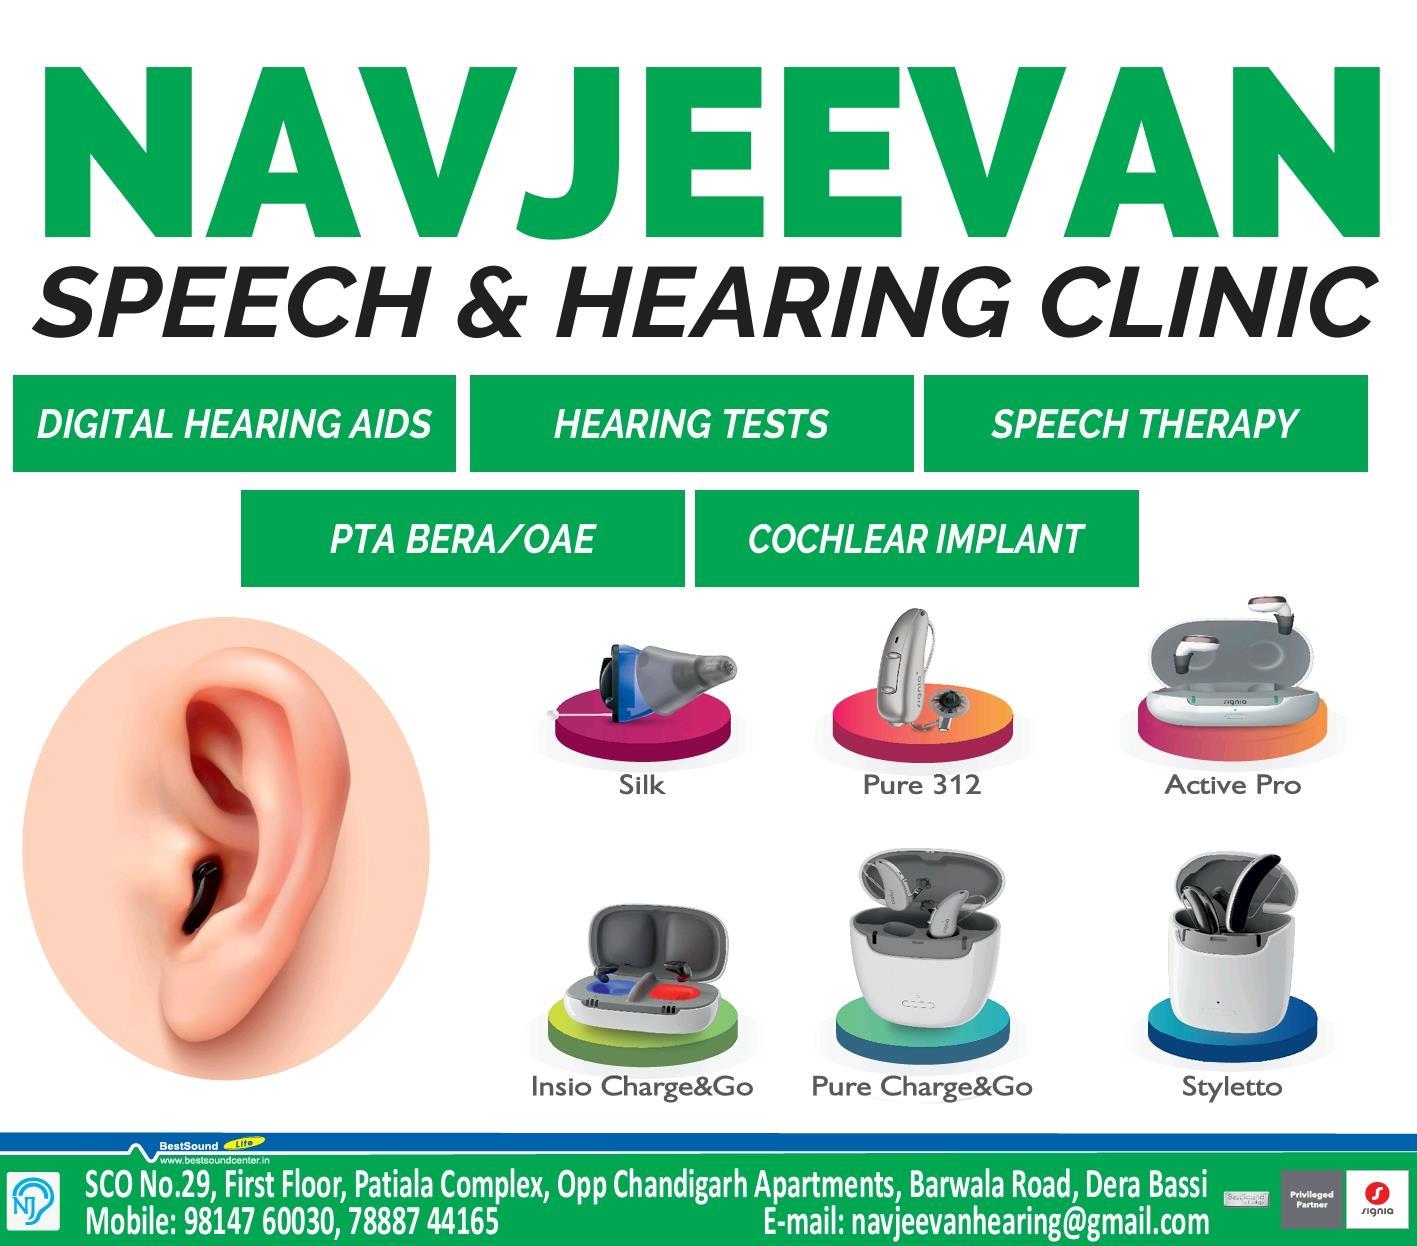 Navjeevan speech And Hearing Clinic Dera Bassi